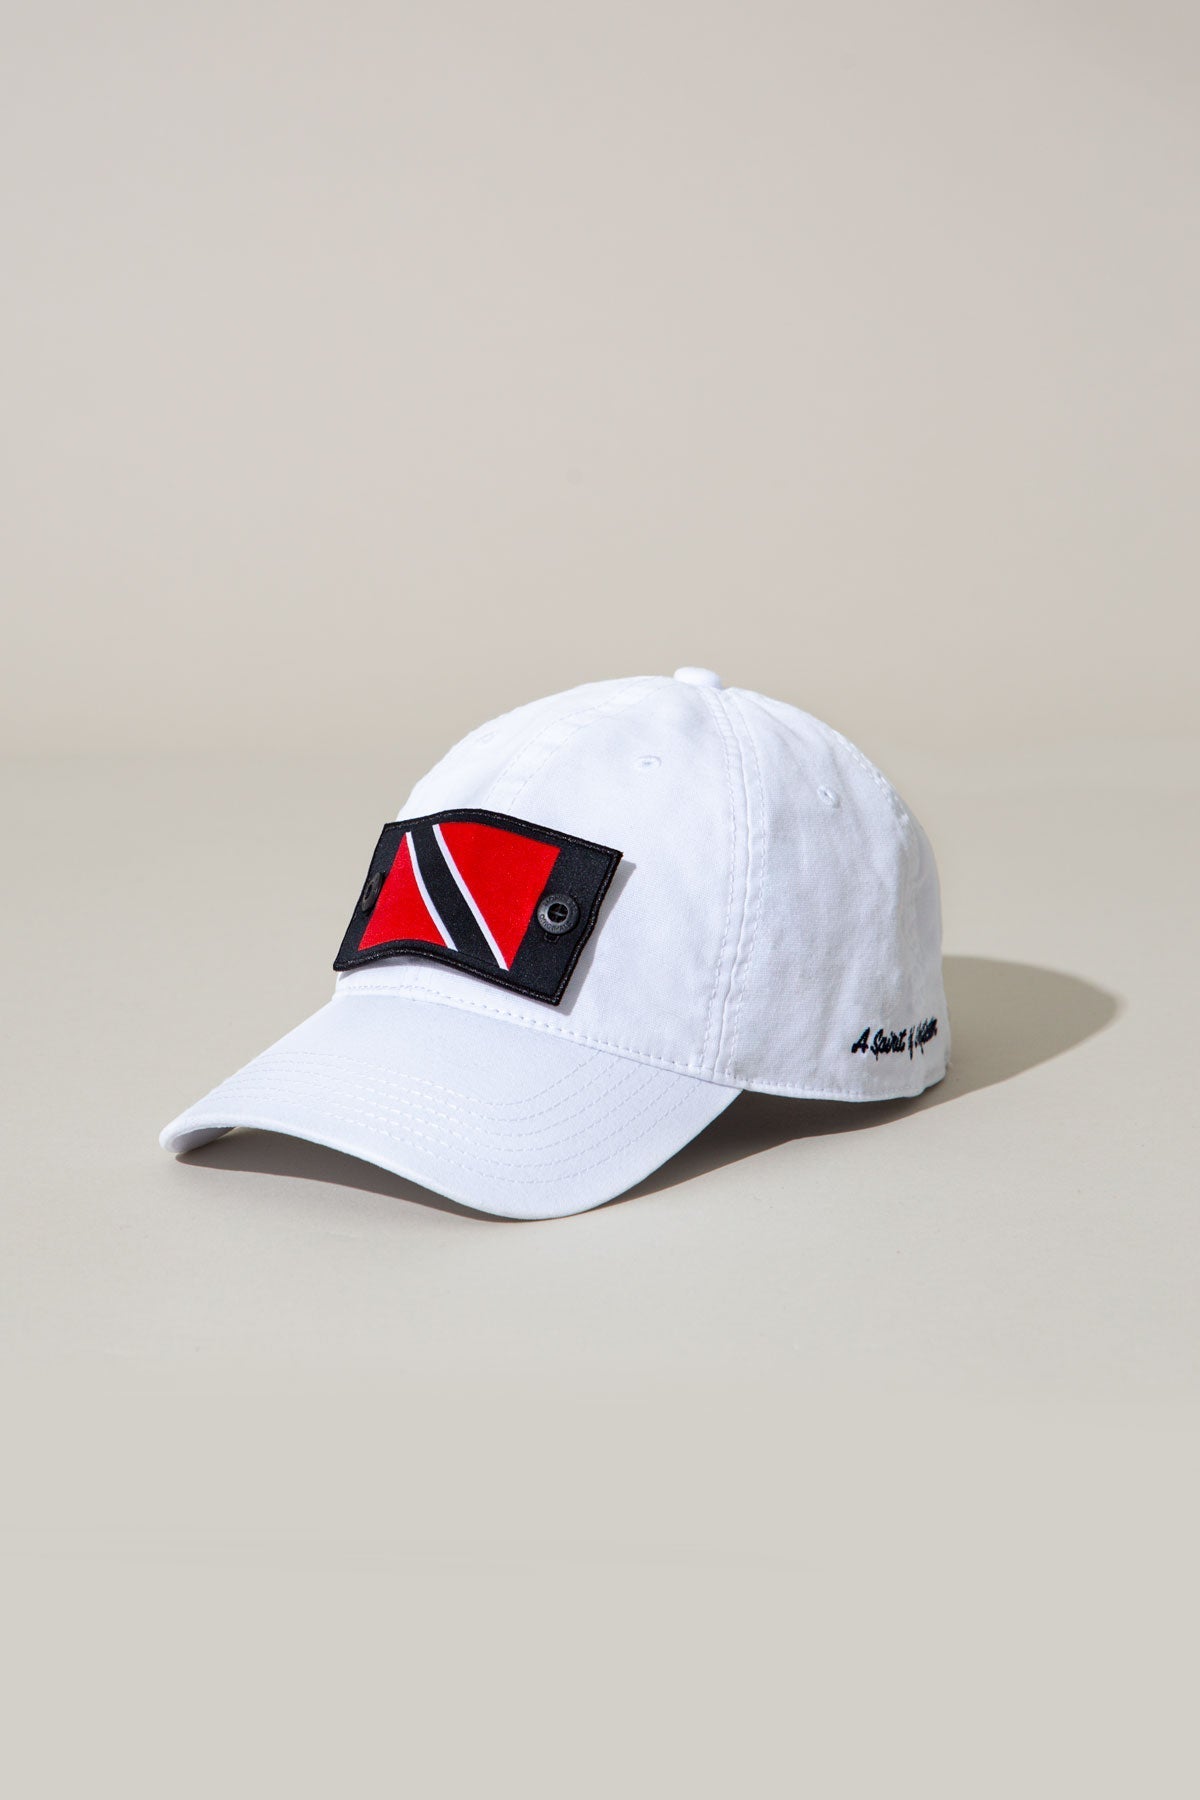  St. Louis City Flag Design Denim Cap Cotton Baseball Hat  Adjustable Vintage for Men Women : Sports & Outdoors